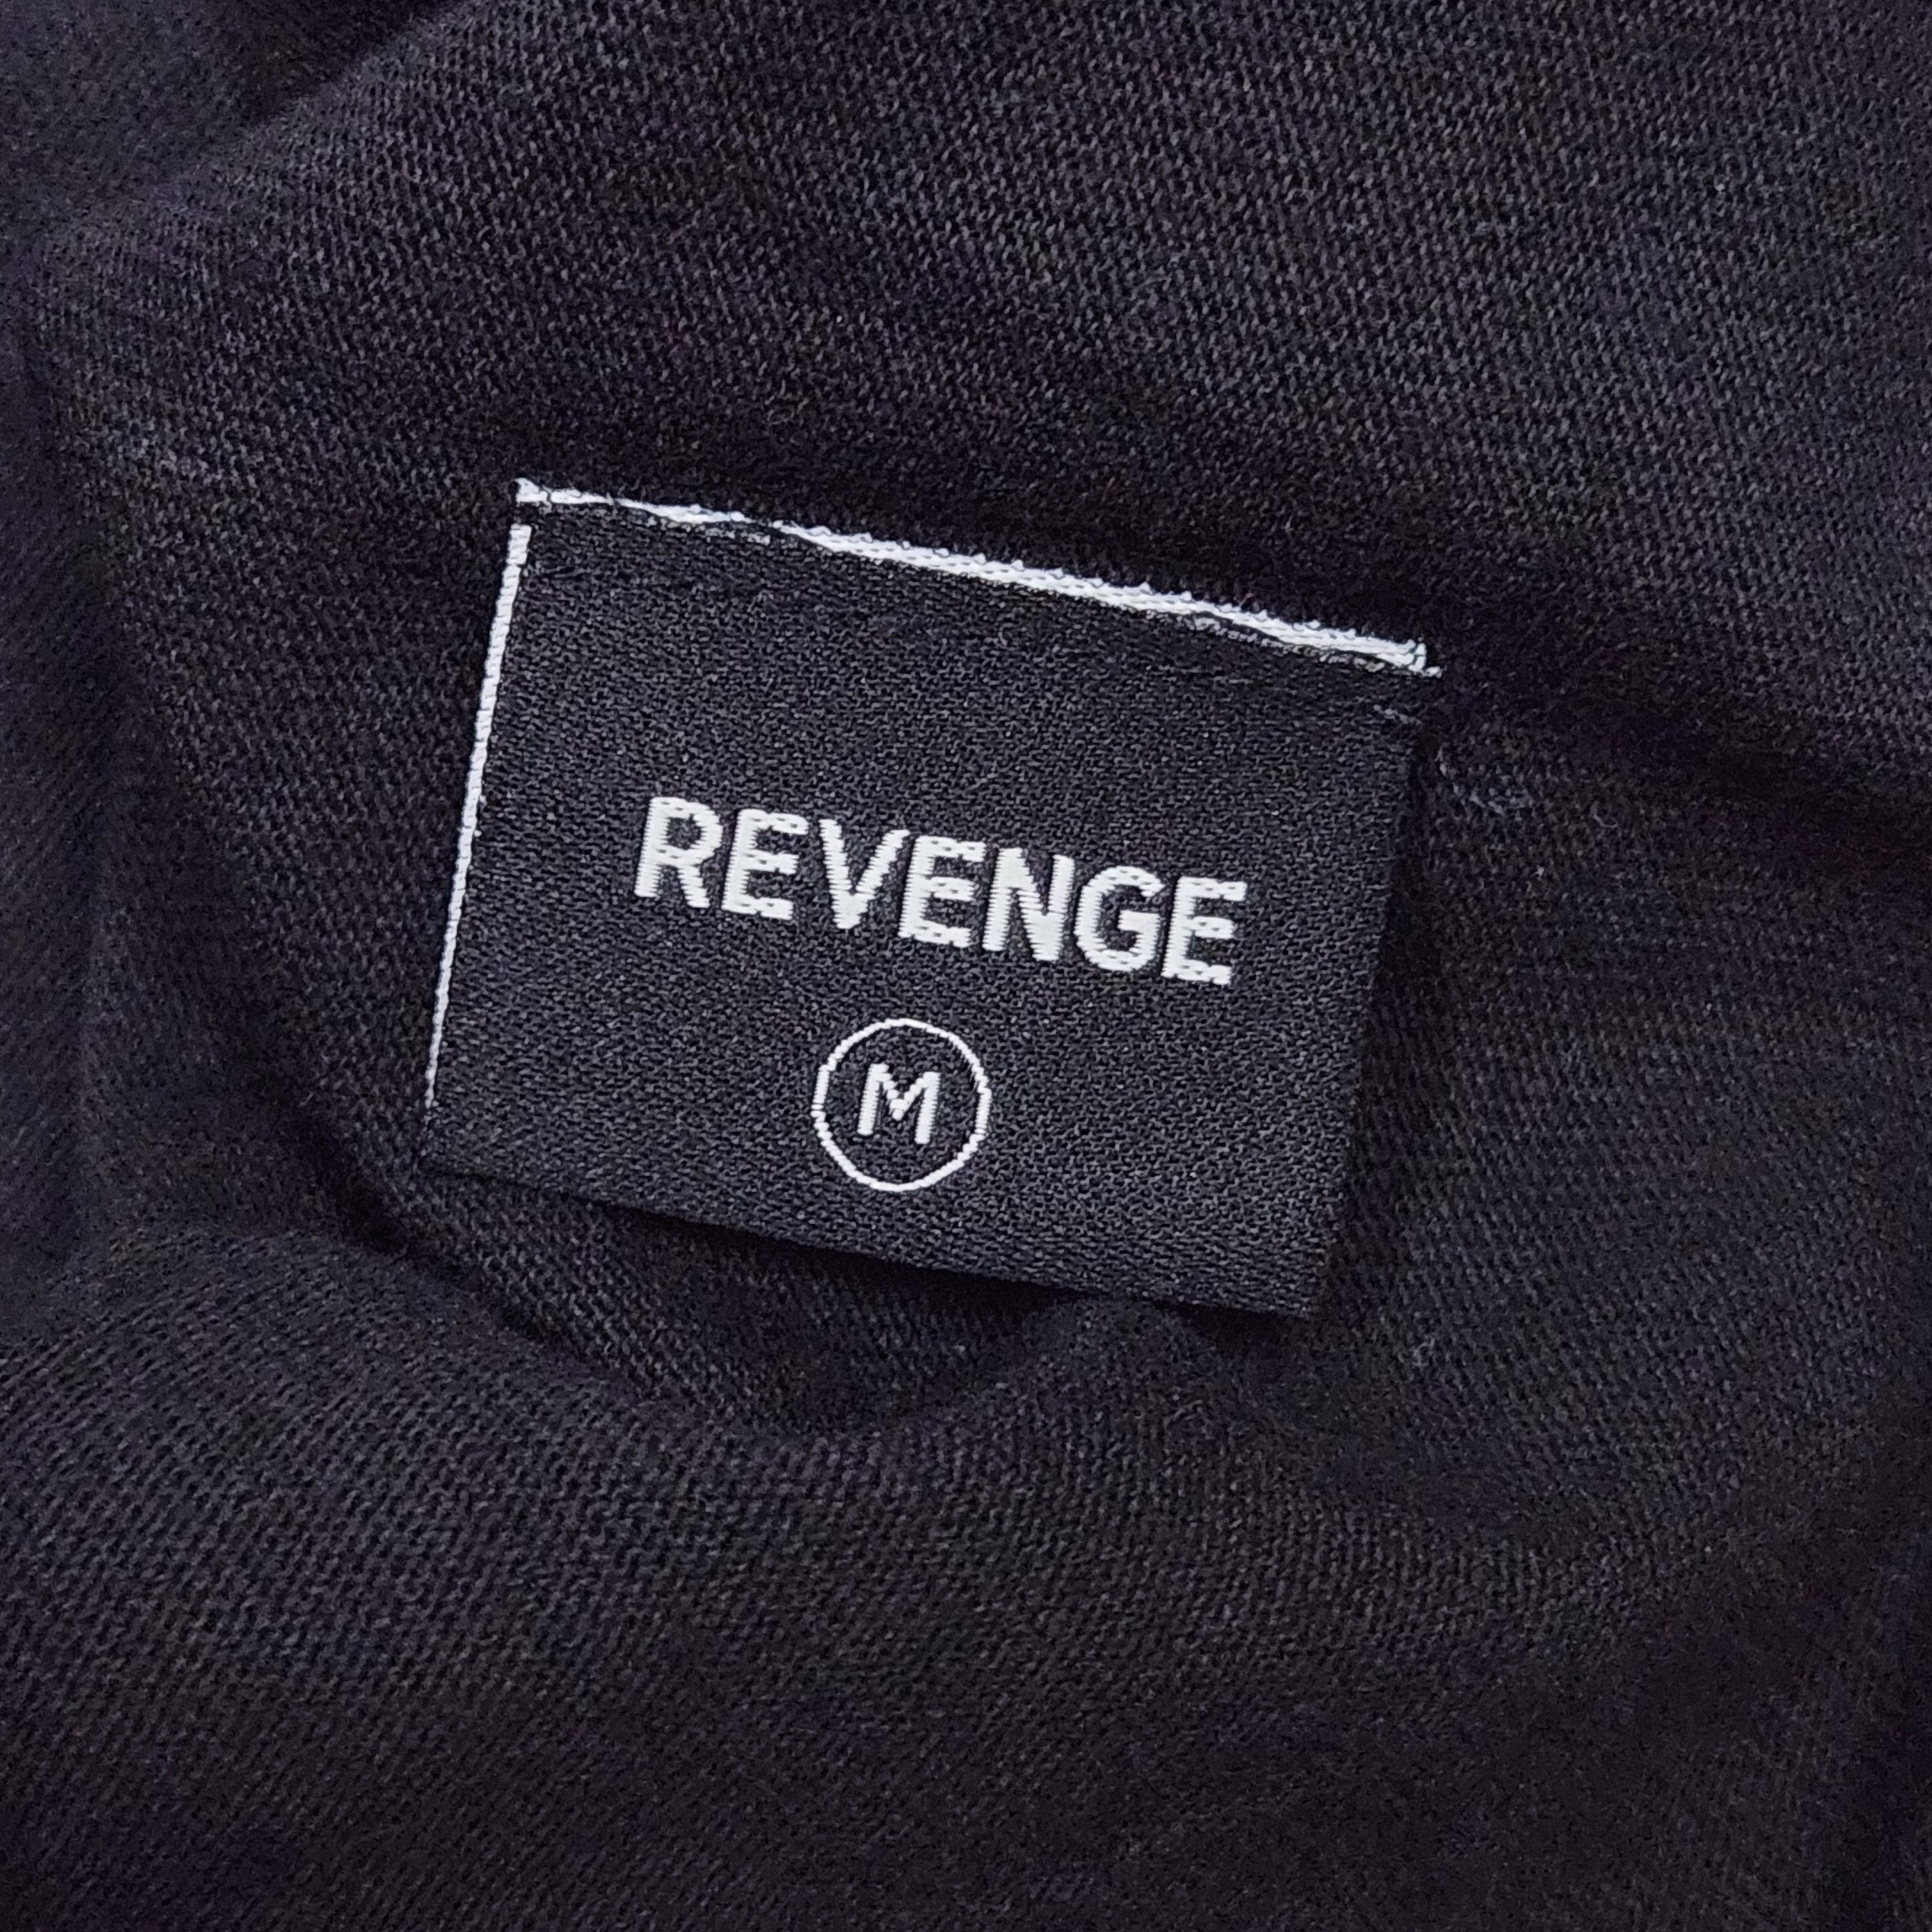 Revenge Original Streetwear Skull Short Sleeve TShirt - 12